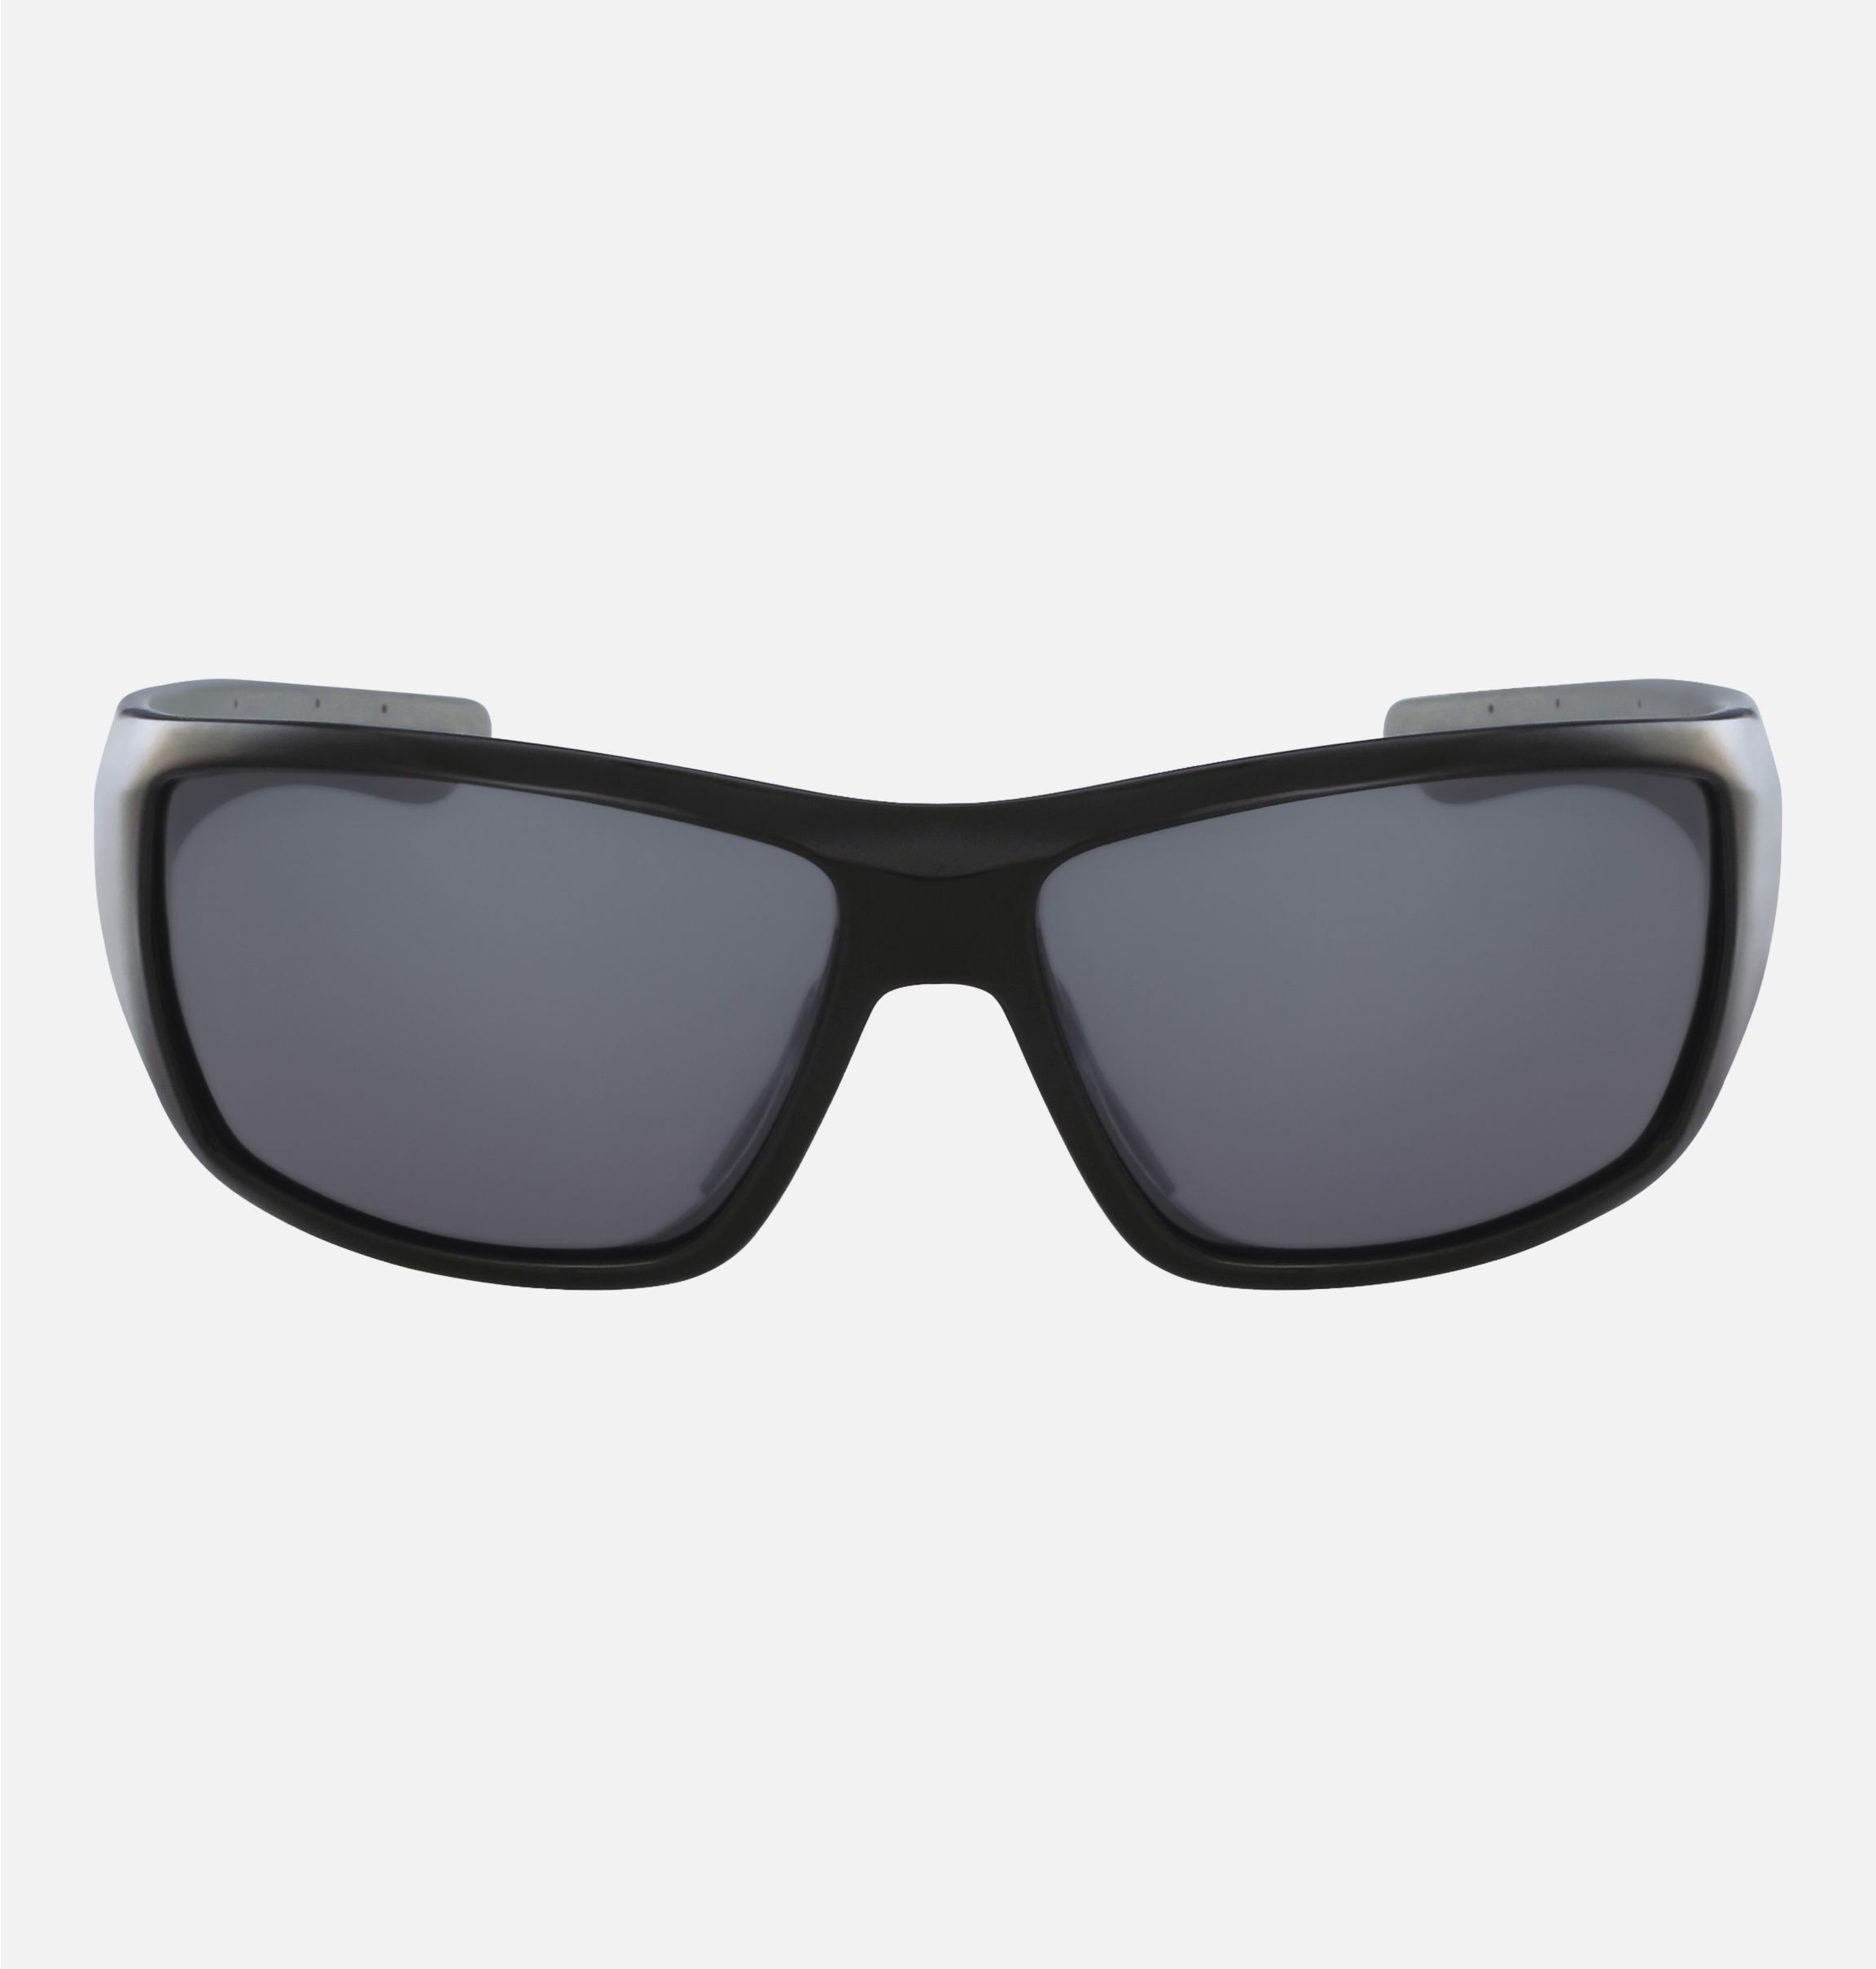 Columbia Utilizer Polarized Sunglasses, Men's, Shiny Black